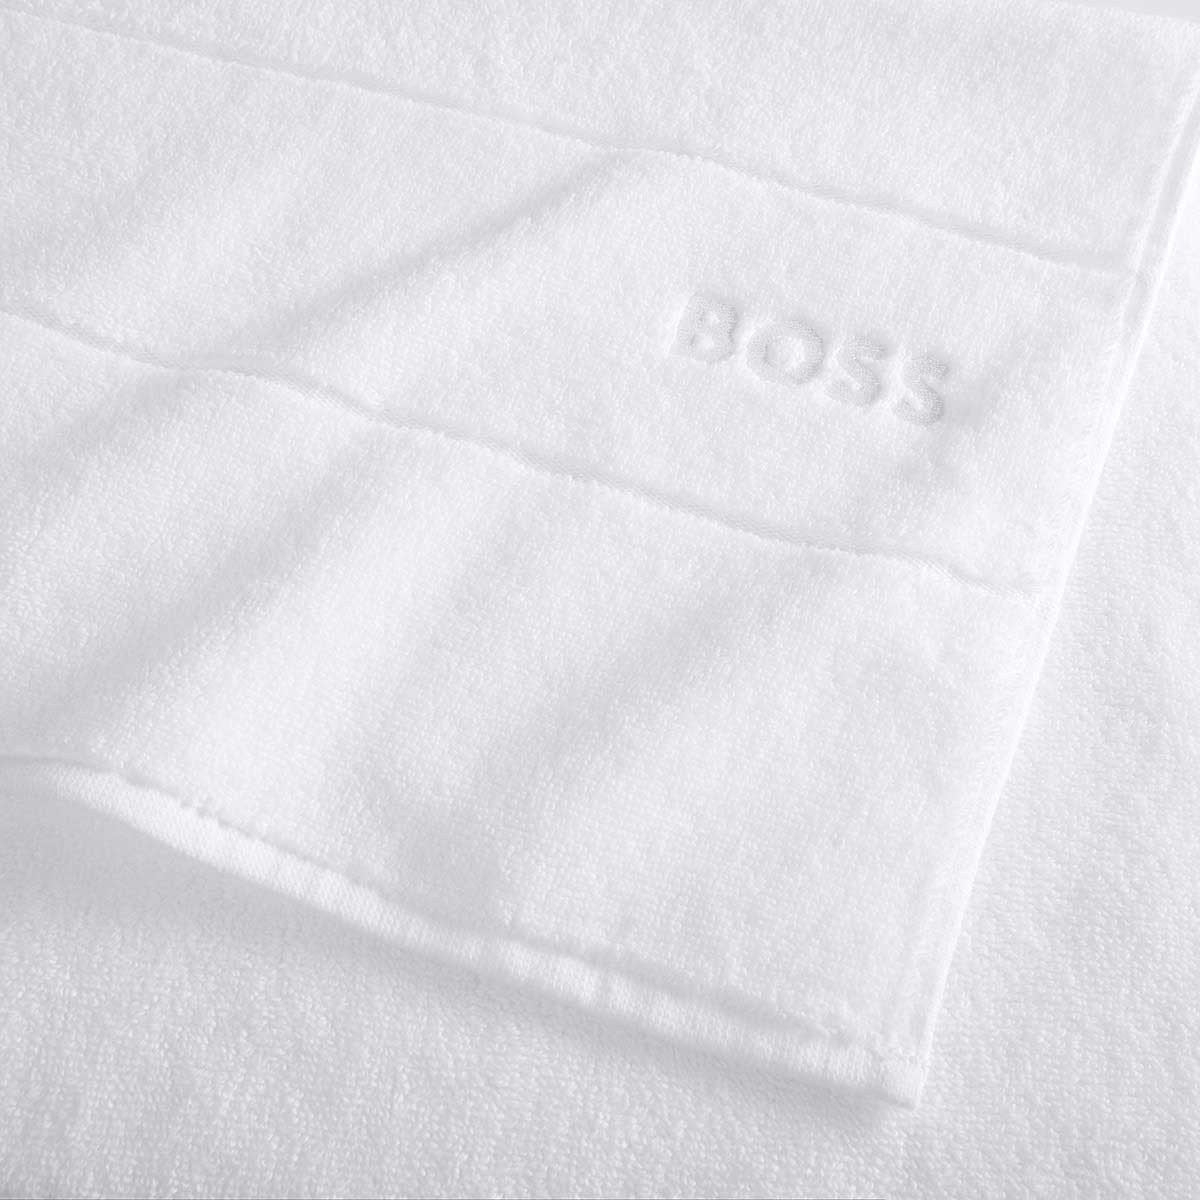 Boss Burgundy Plain logo-embroidered Egyptian Cotton Towel Bath Sheet